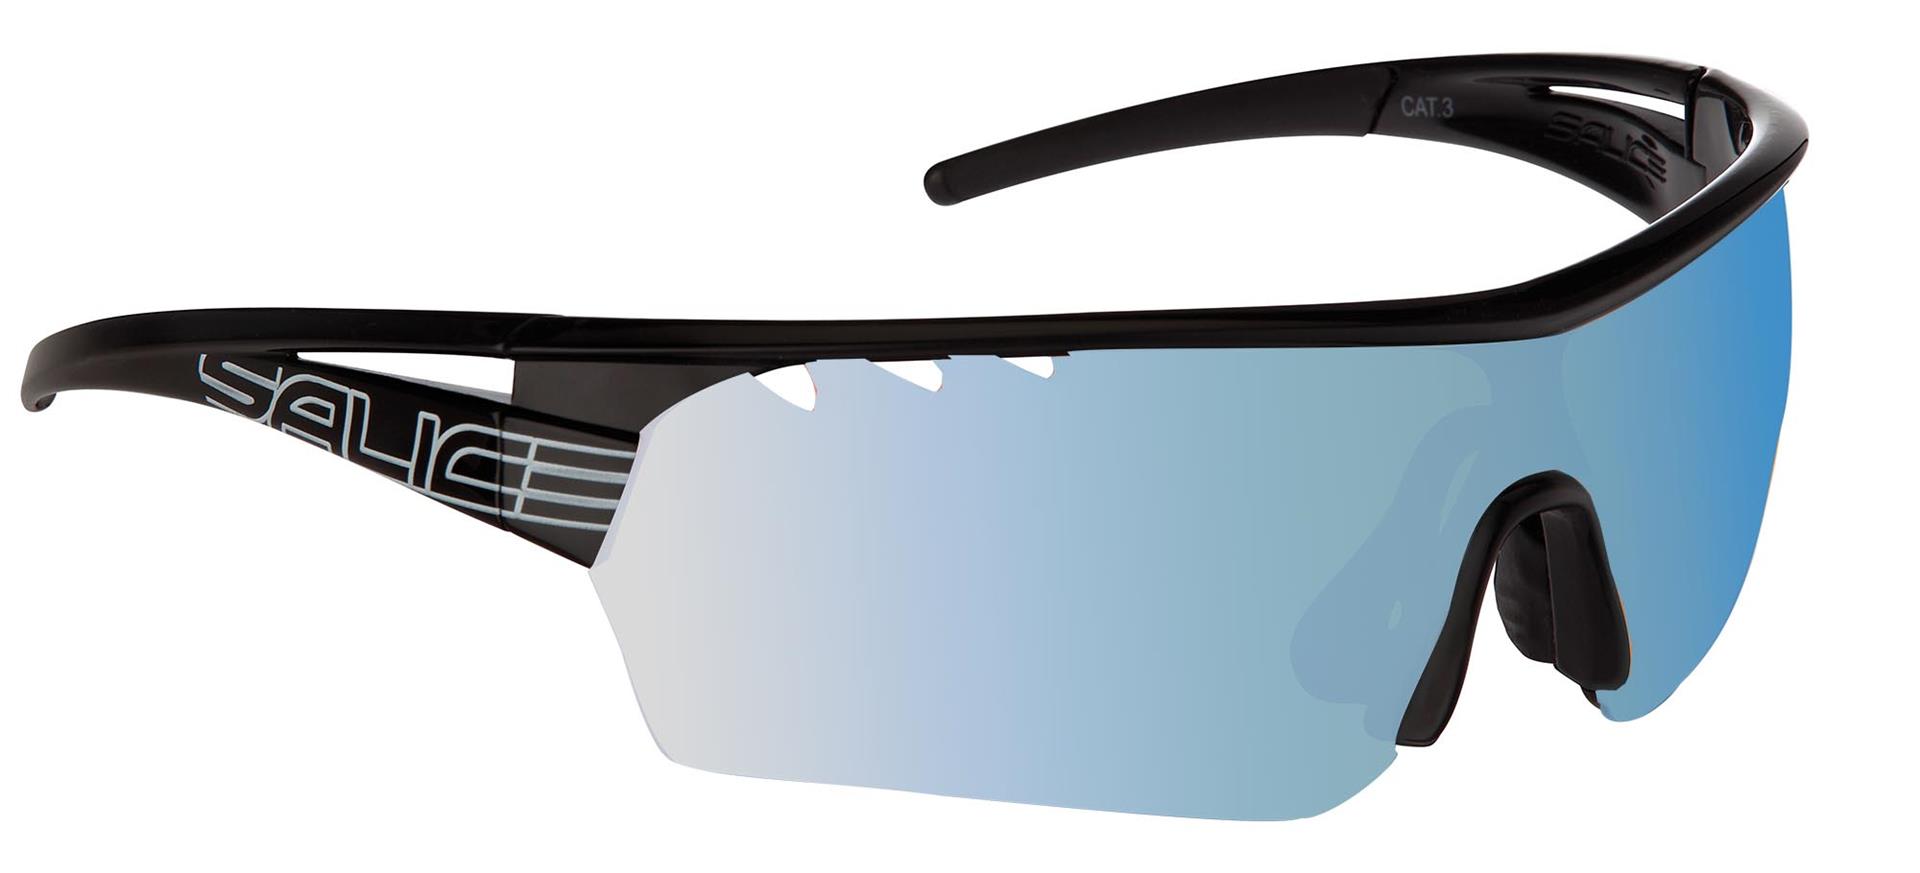 Salice 006RWX Sport sunglasses, Black